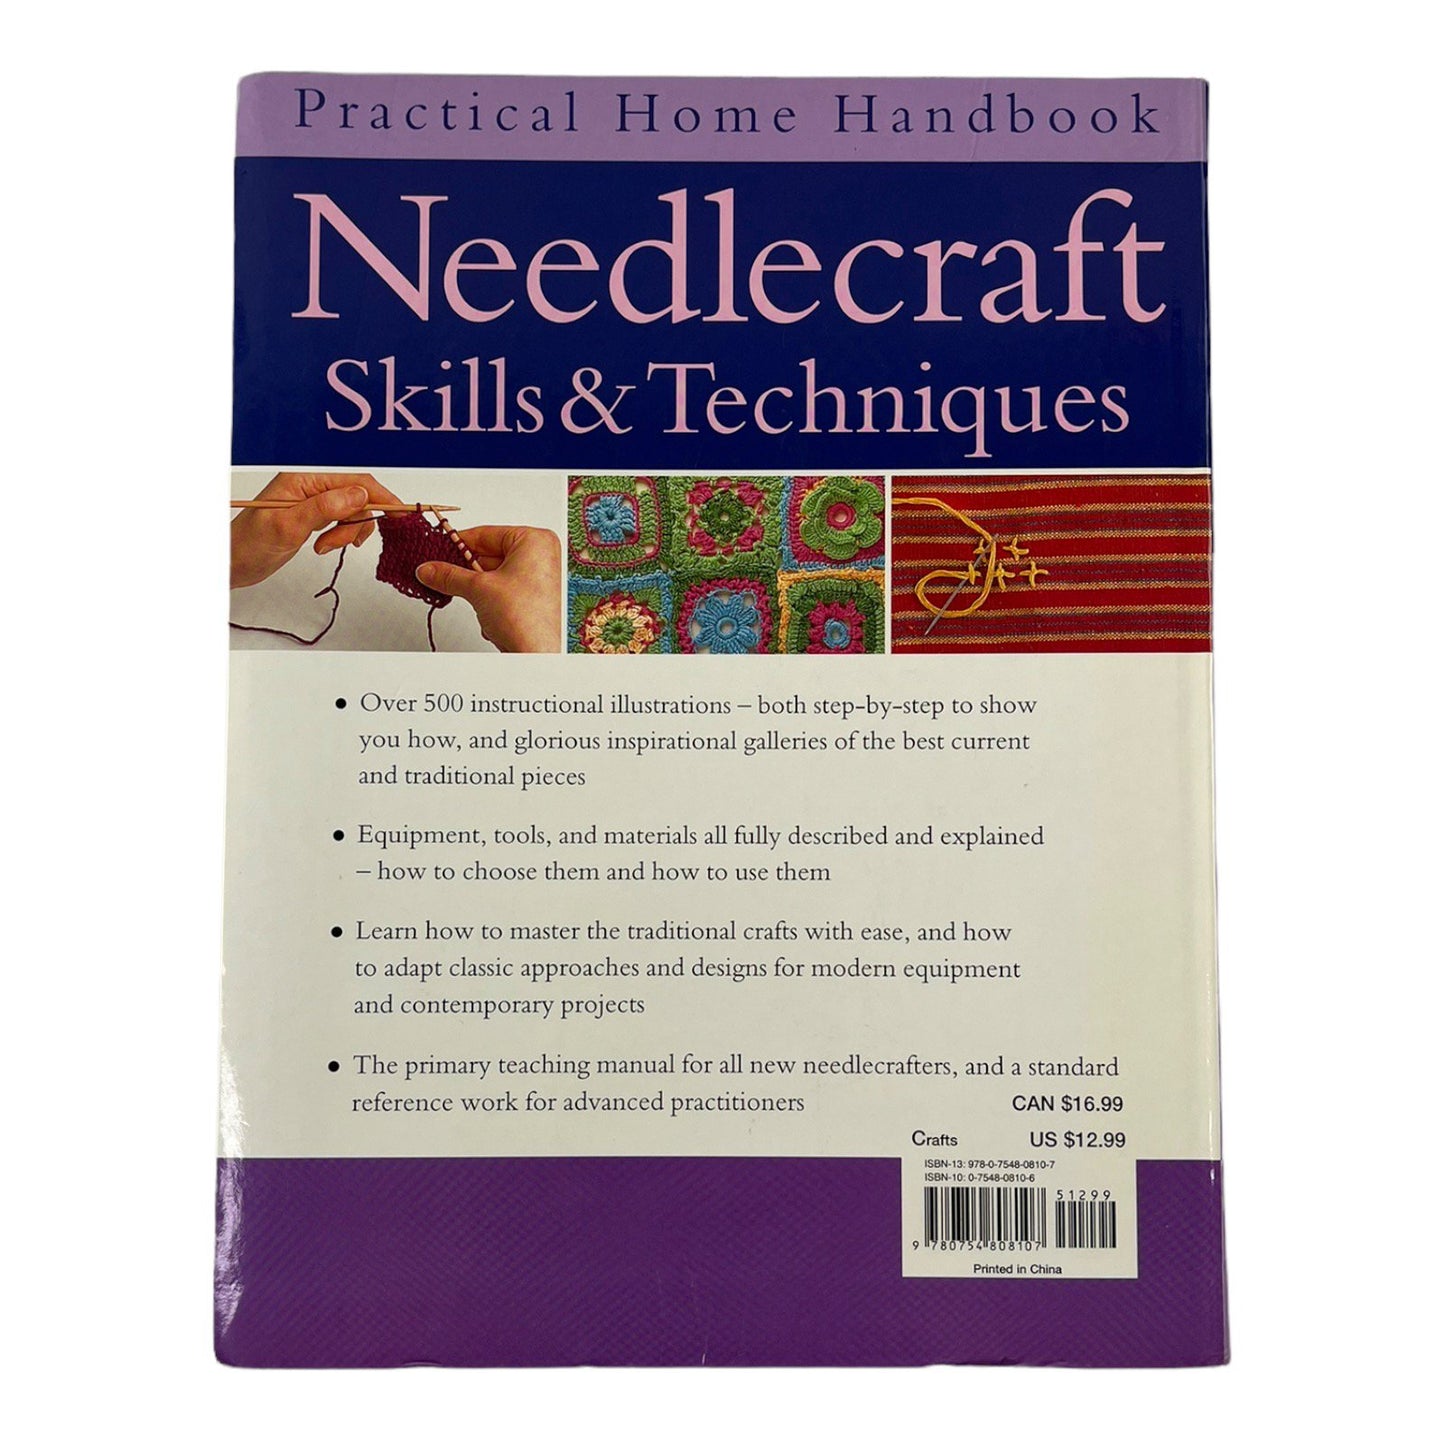 Practical Home Handbook Needlecraft Skills & Techniques Hardcover Book